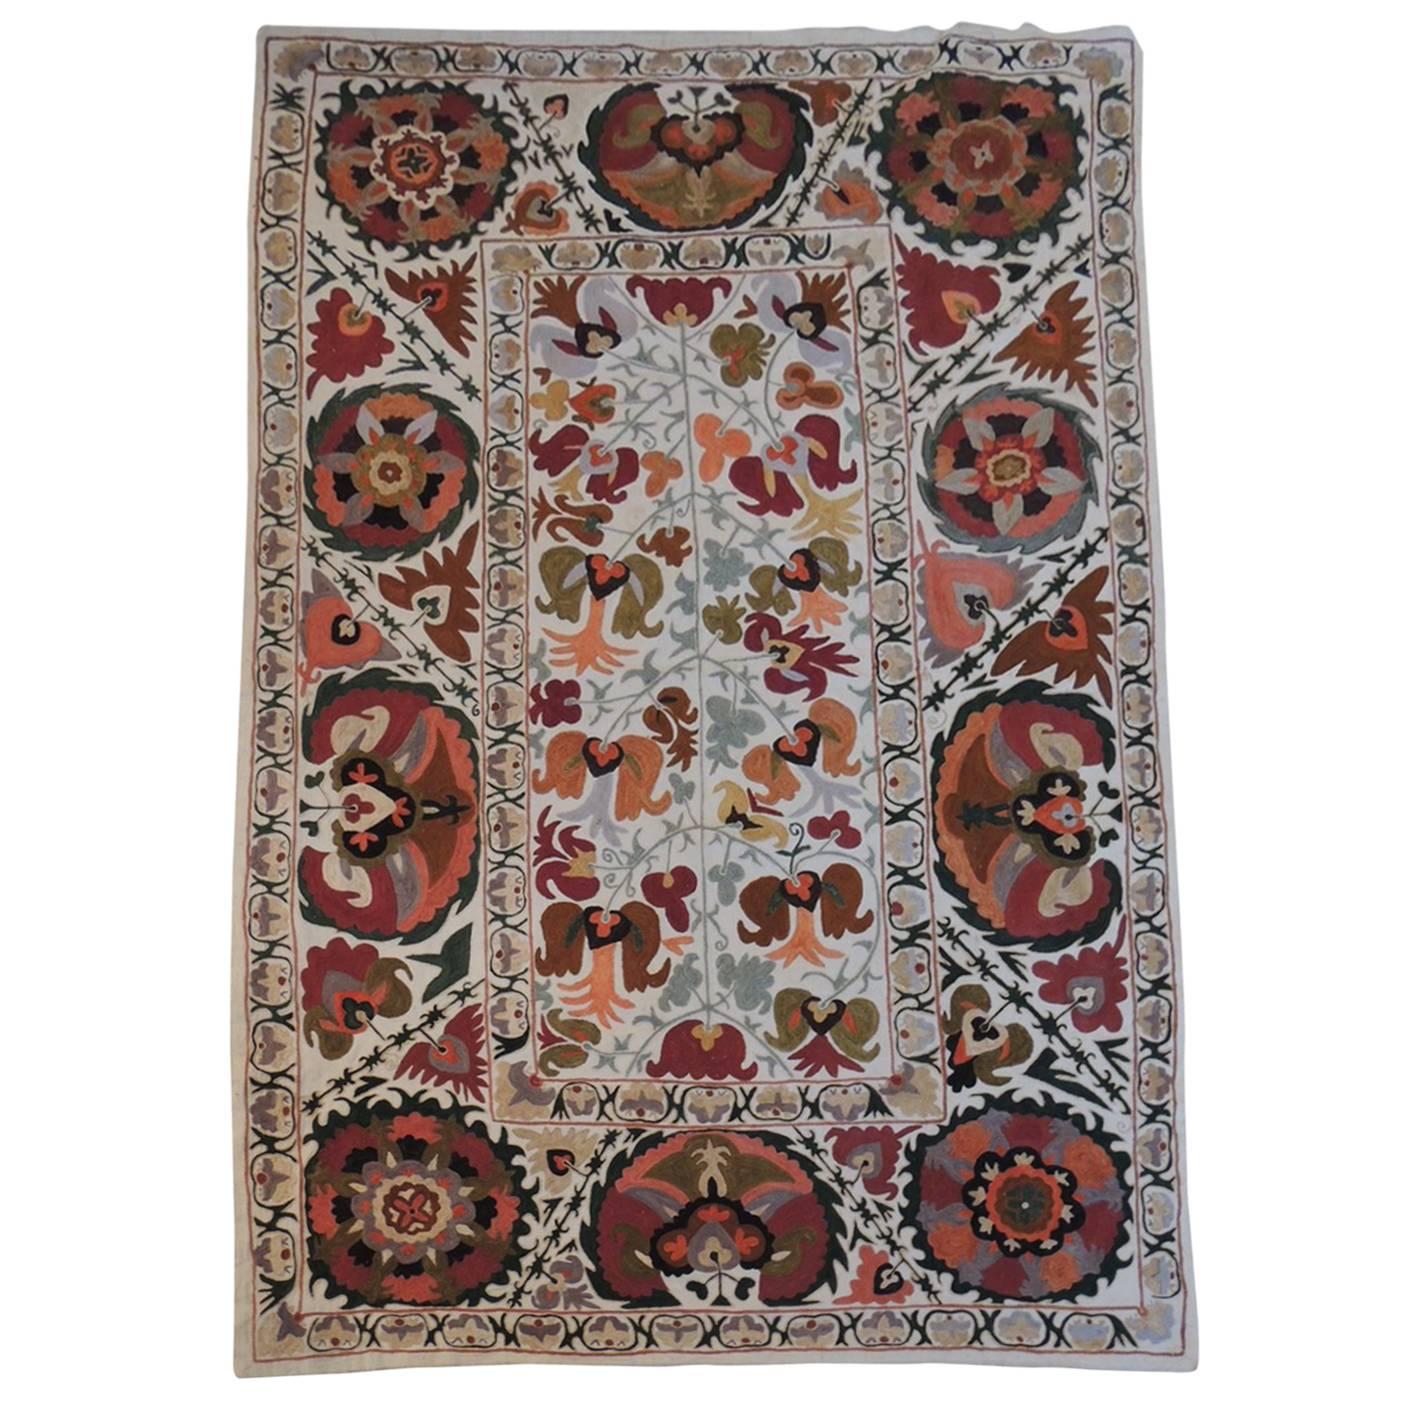 Vintage Uzbekistan Embroidery Suzani Textile Panel